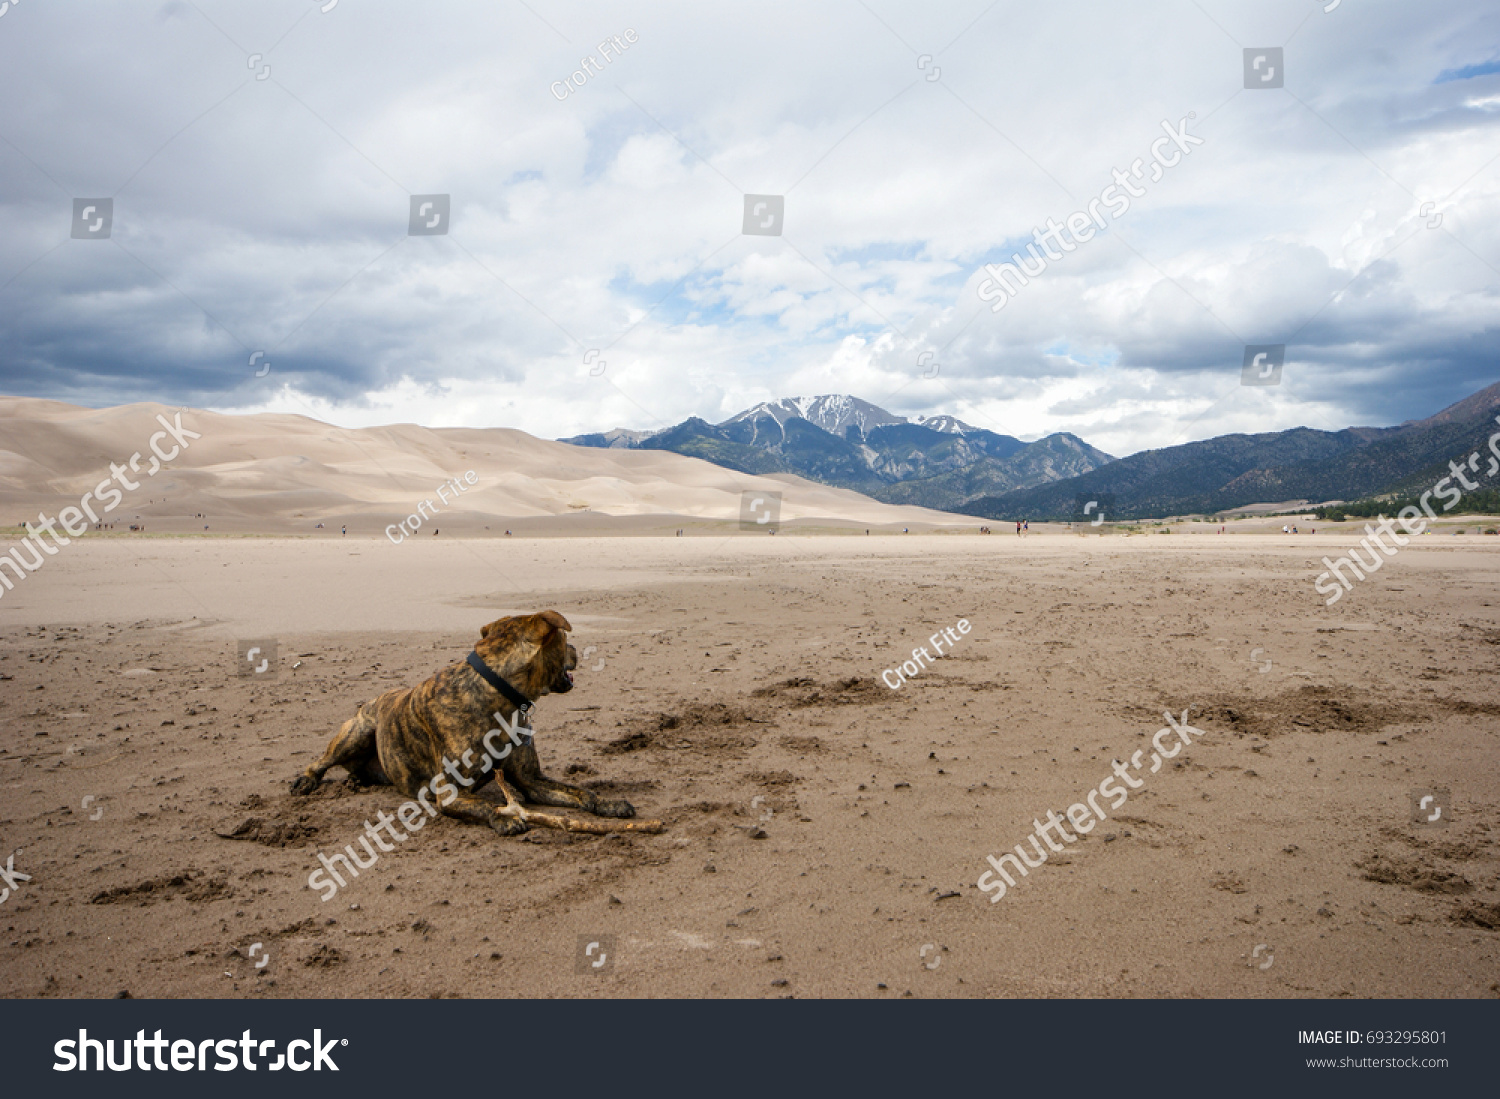 Plott hound enjoying Great Sand Dunes National Park. #693295801